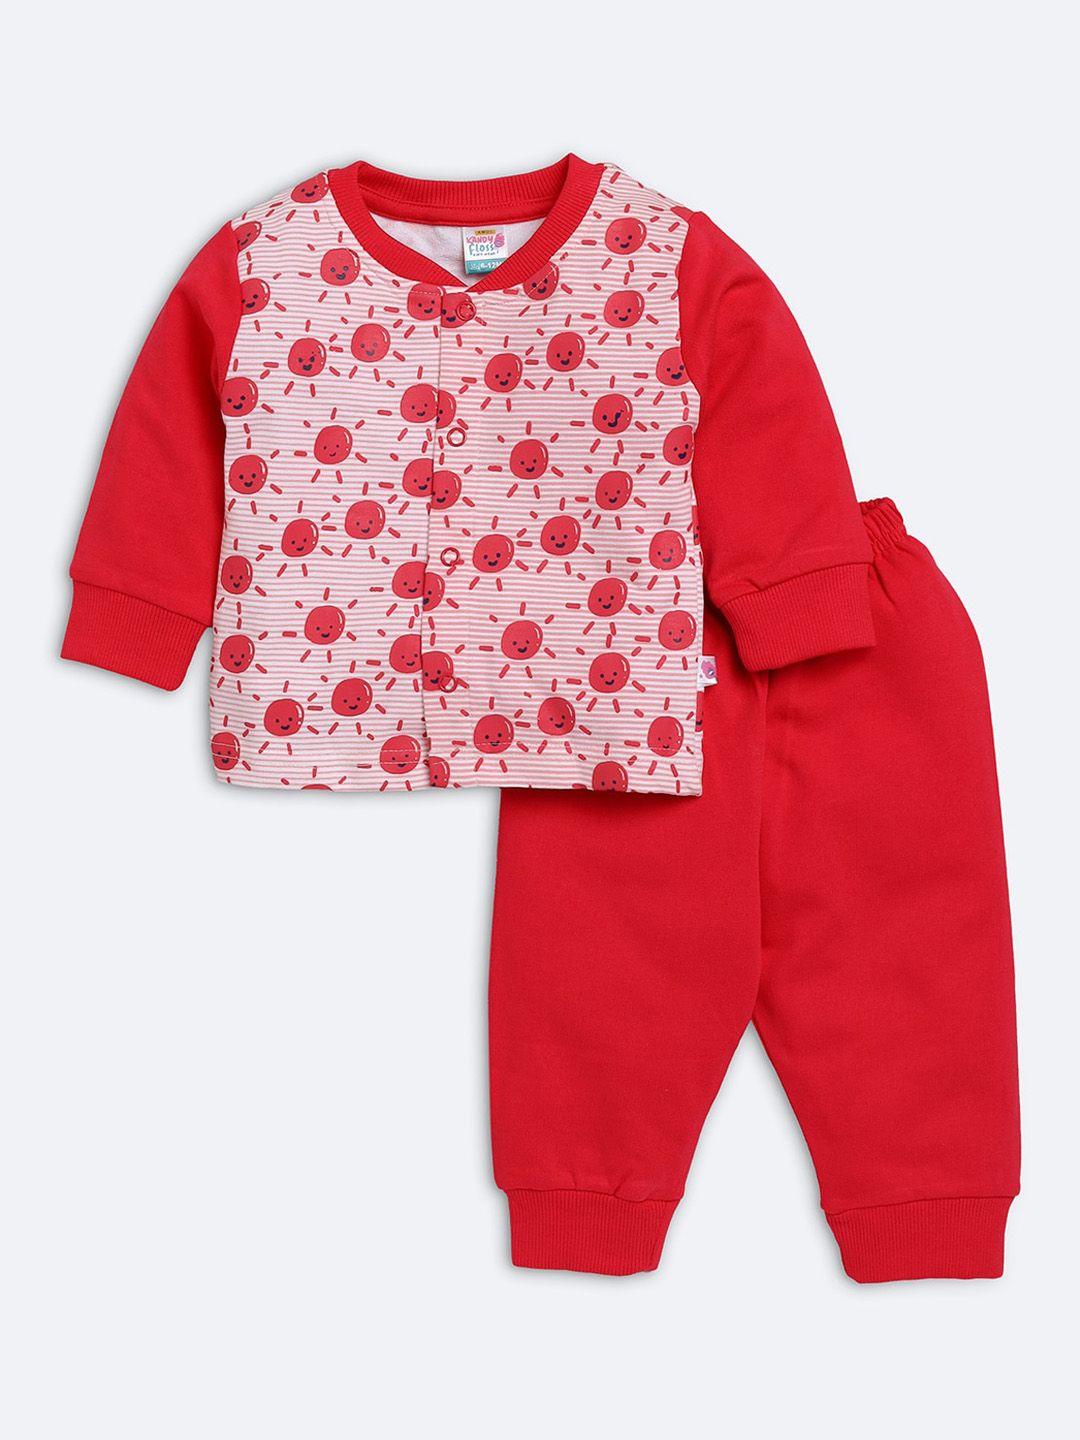 amul-kandyfloss-unisex-kids-red-&-white-pure-cotton-printed-clothing-set-set